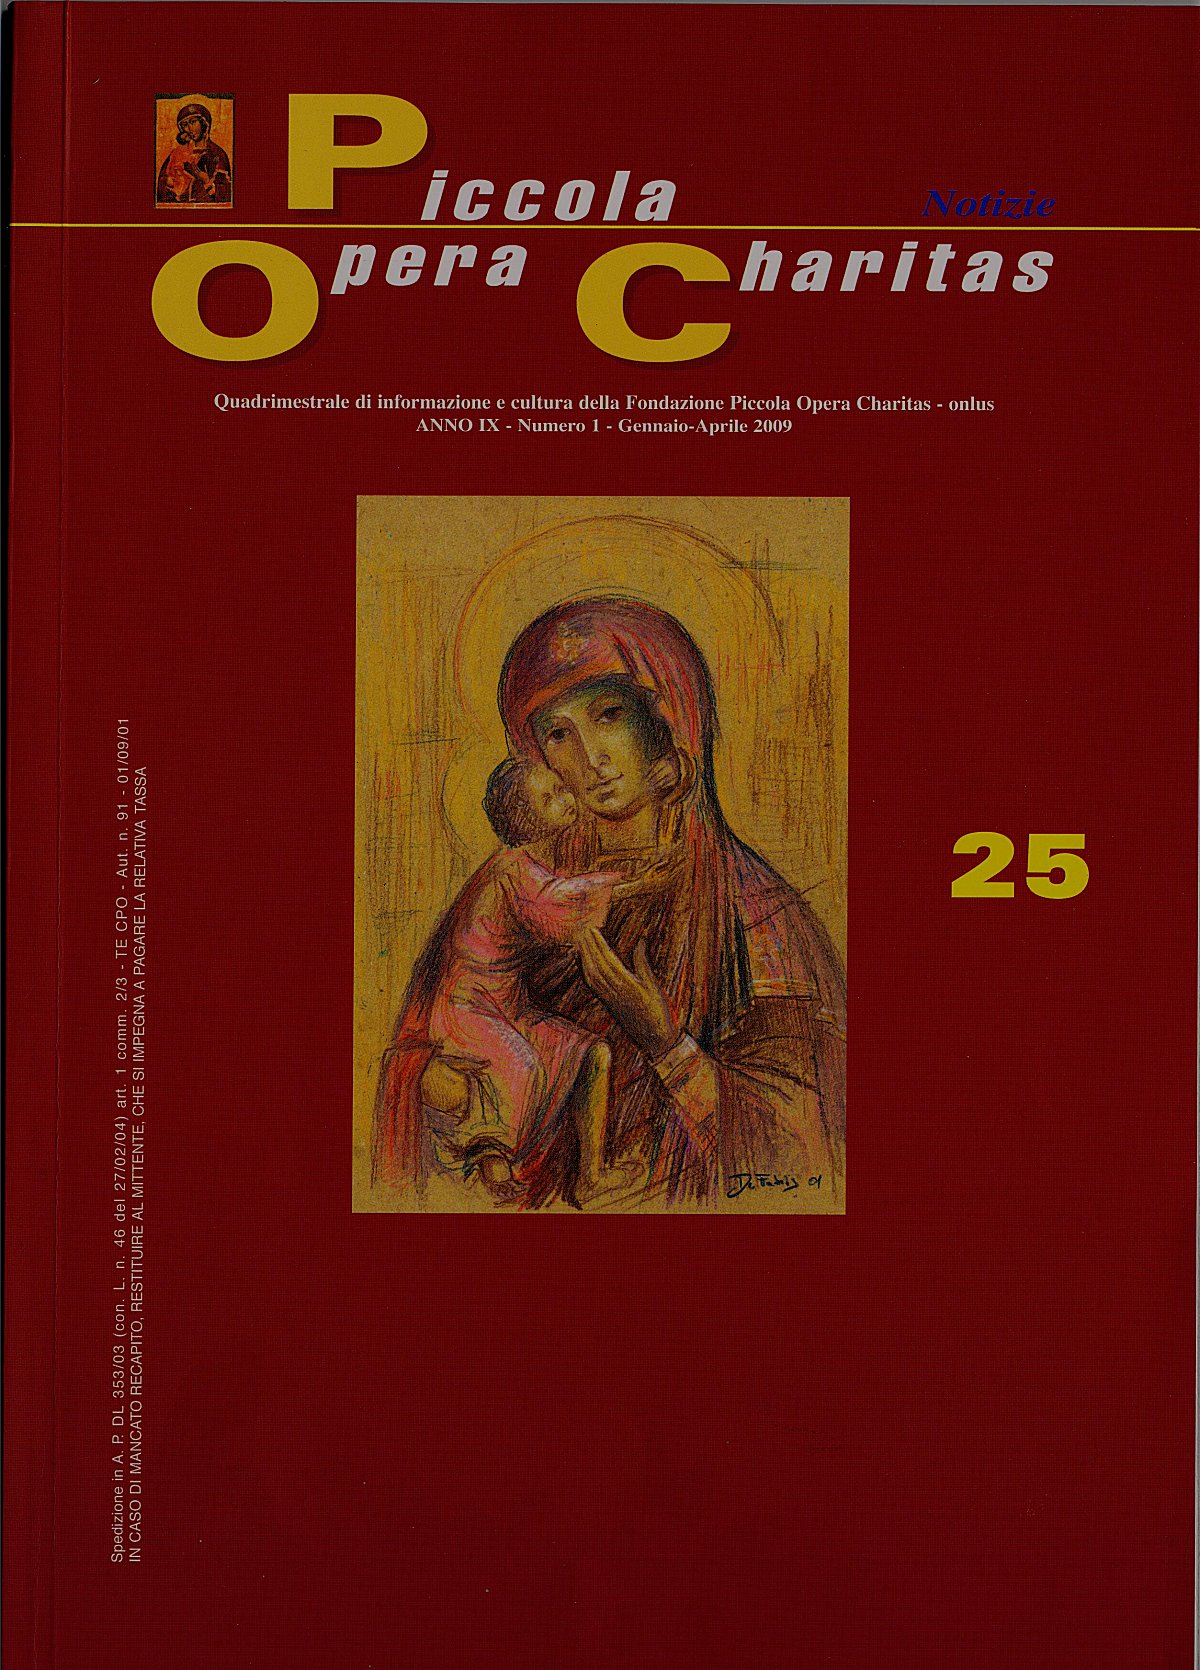 Piccola Opera Charitas, anno IX, n. 1, gennaio-aprile 2009